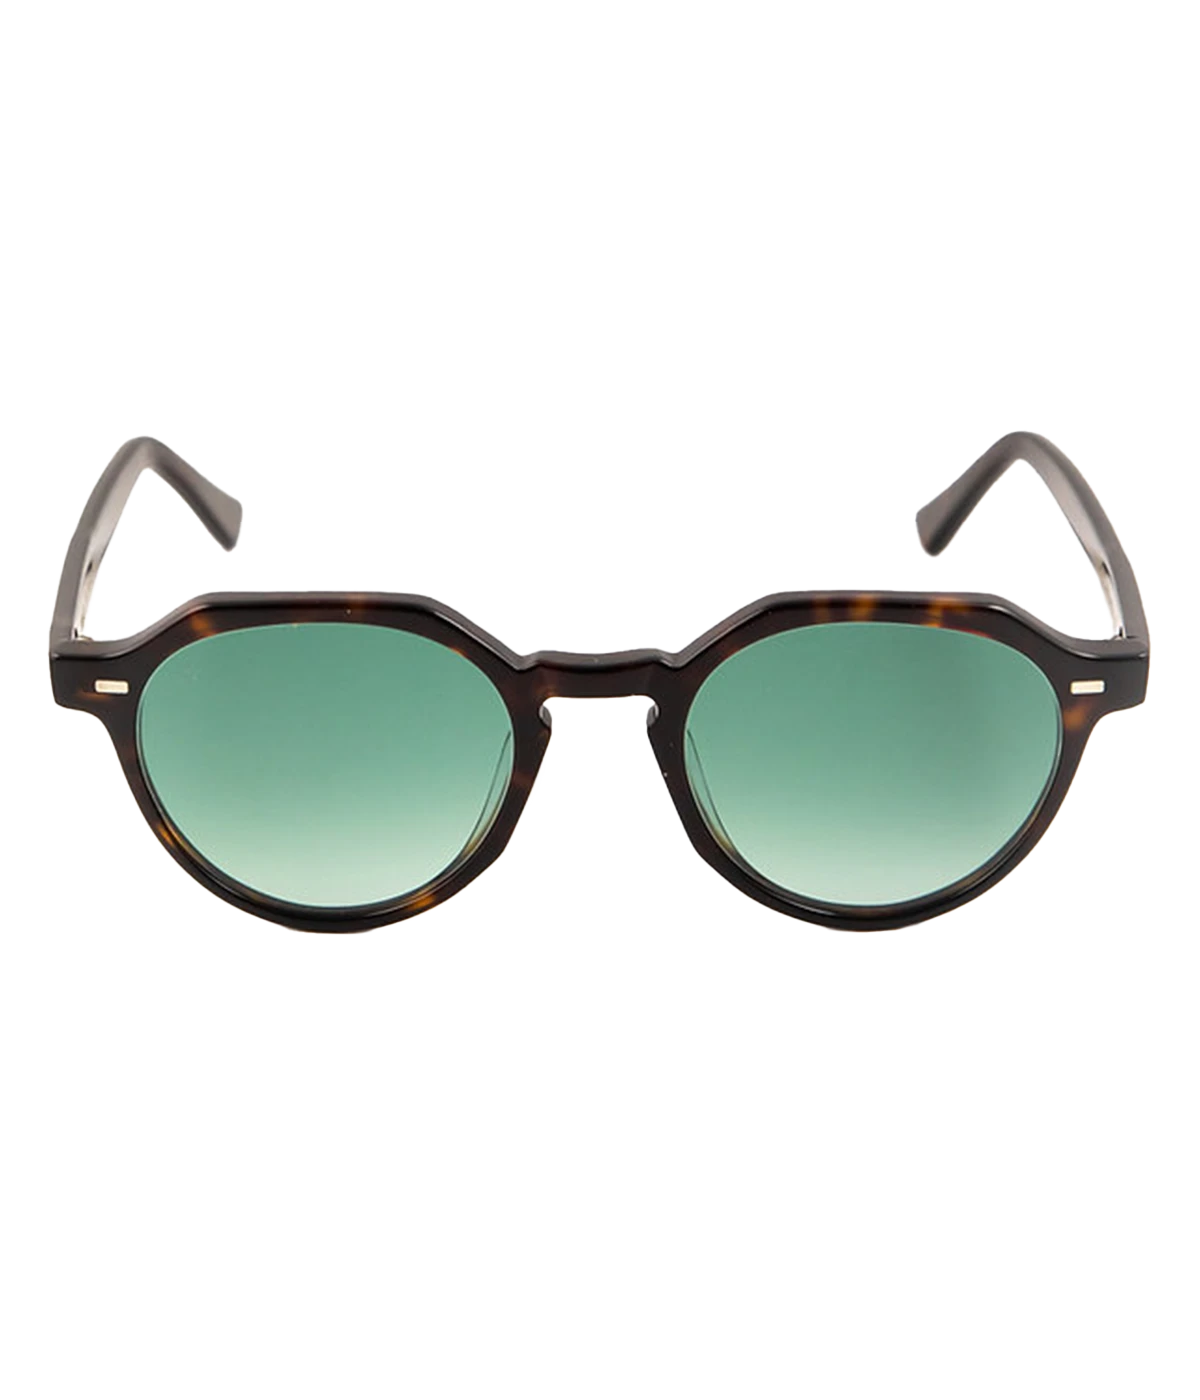 Amalfi Sunglasses in Green Degrade